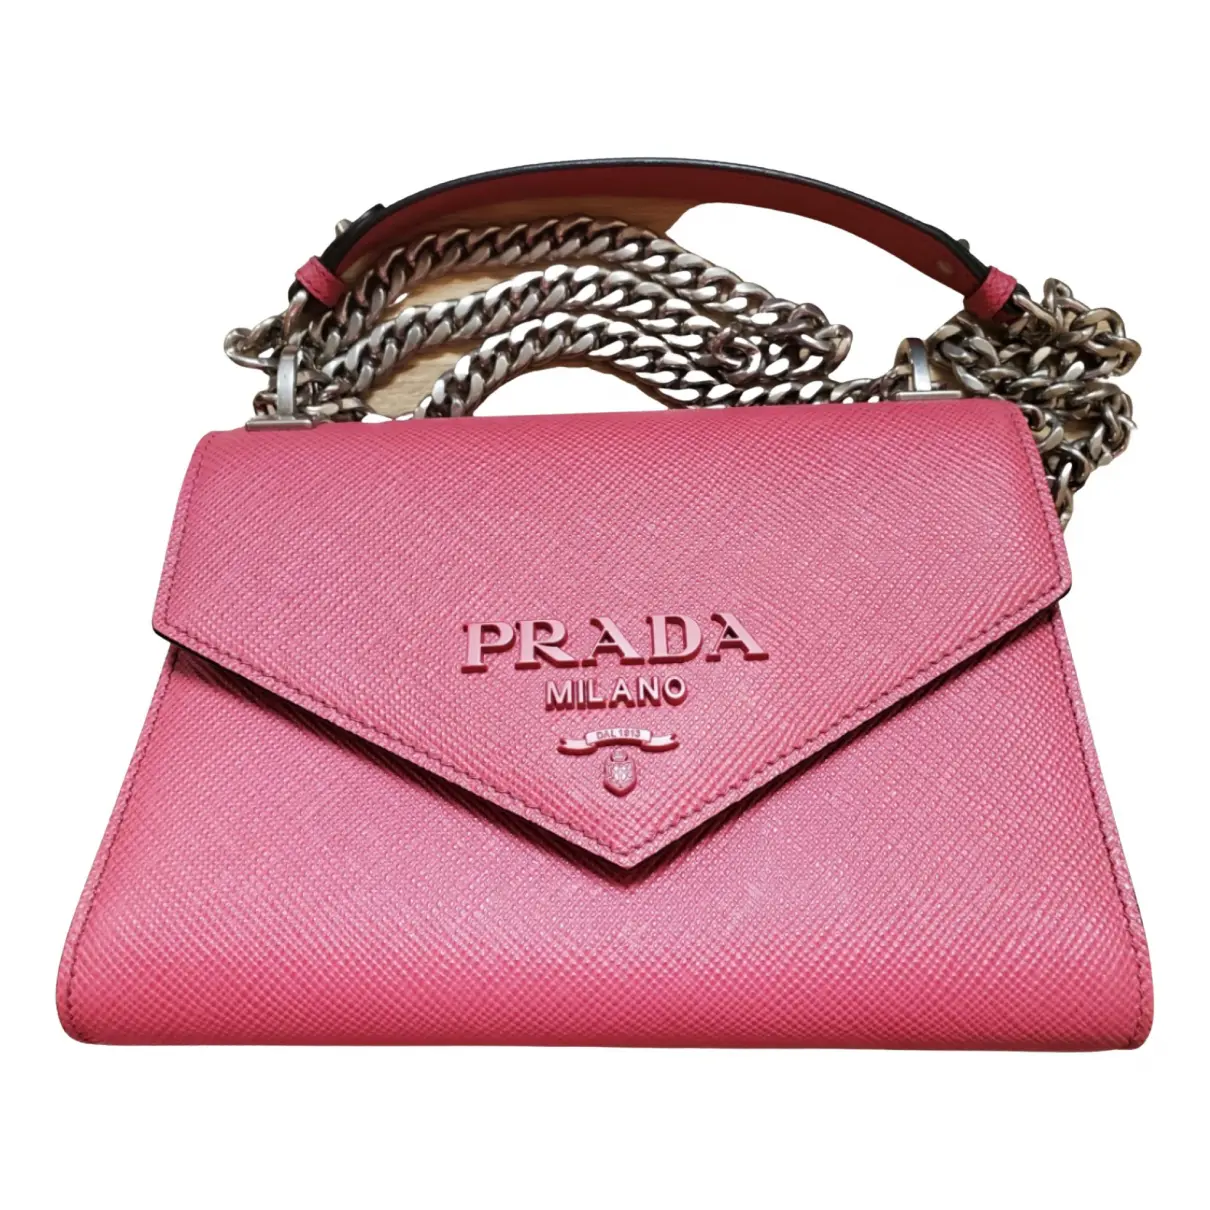 Monochrome leather crossbody bag Prada